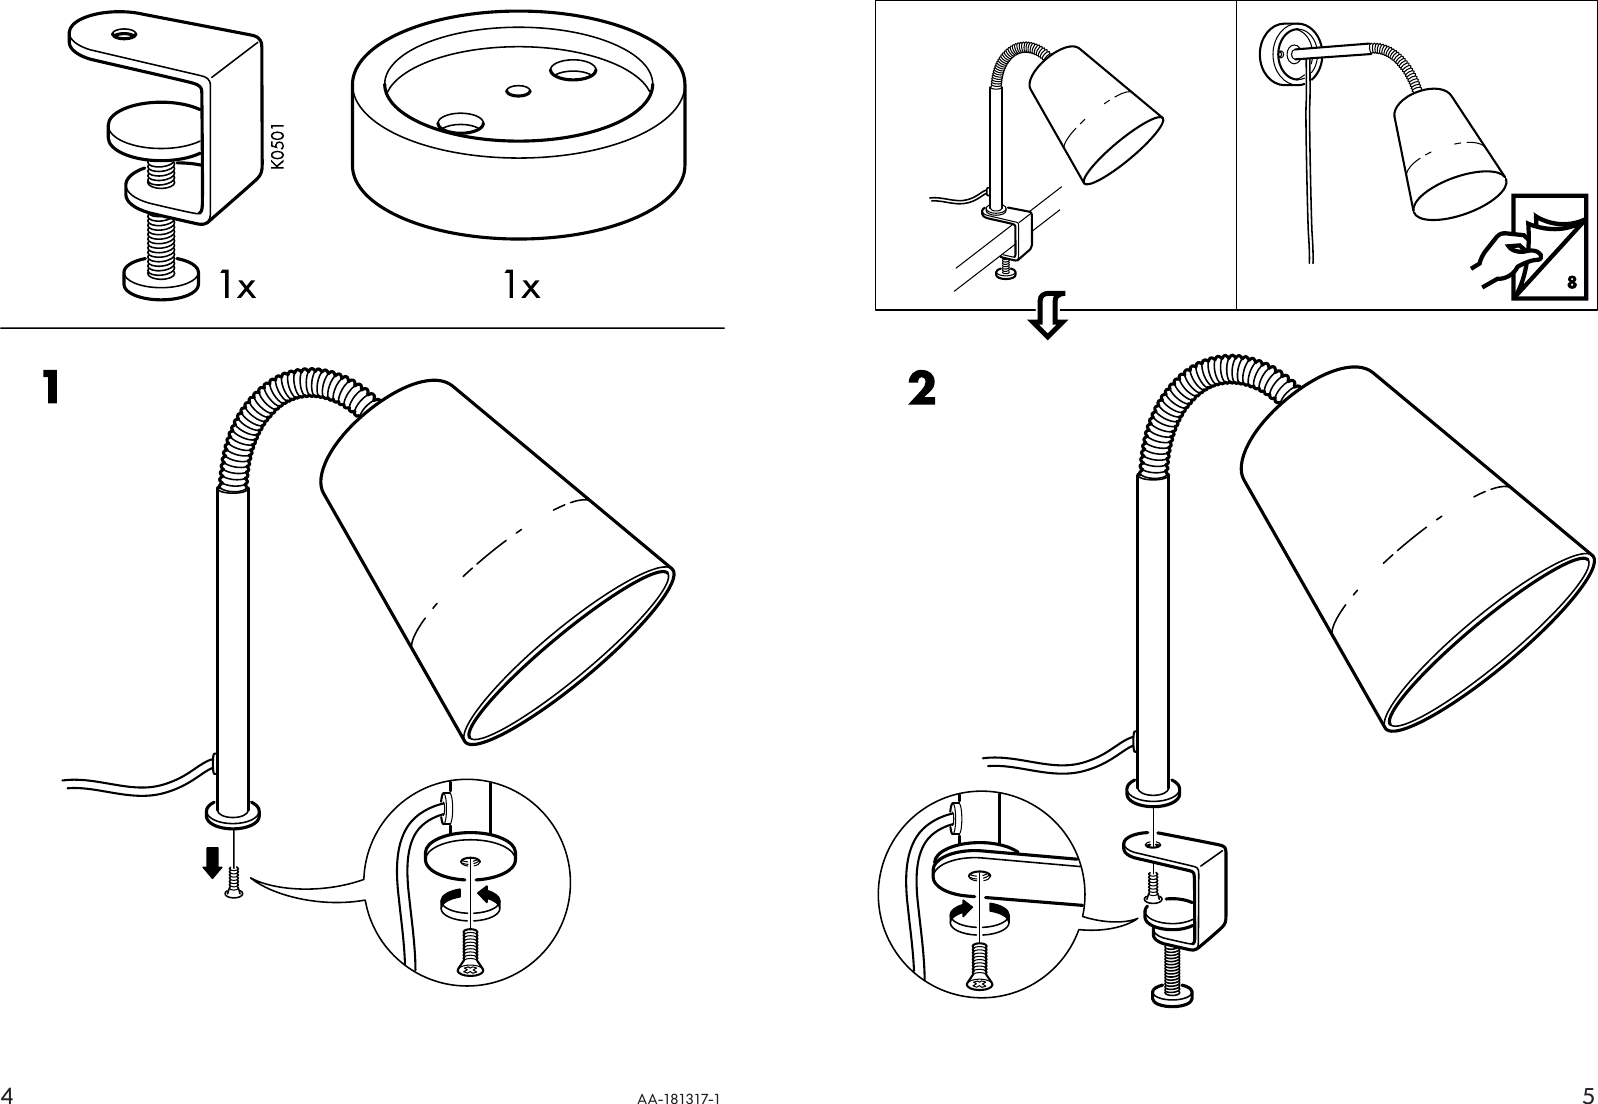 Page 4 of 4 - Ikea Ikea-Basisk-Wall-Clamp-Spot-Light-Assembly-Instruction-3  Ikea-basisk-wall-clamp-spot-light-assembly-instruction